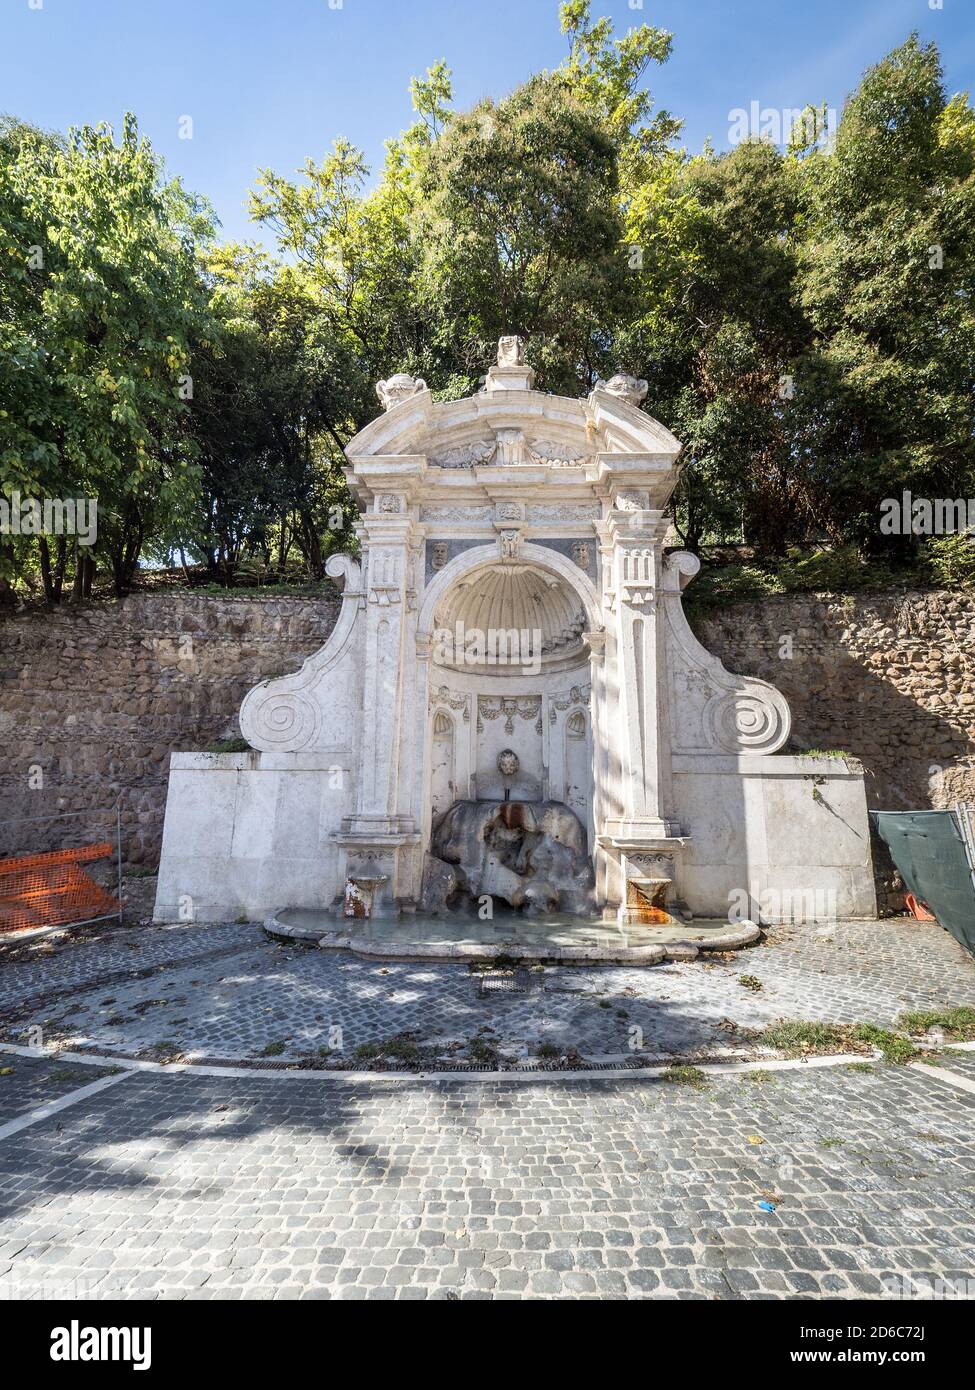 The ancient fountain of the Prison (fontana del Prigione) by Domenico Fontana in Trastevere - Rome, Italy Stock Photo